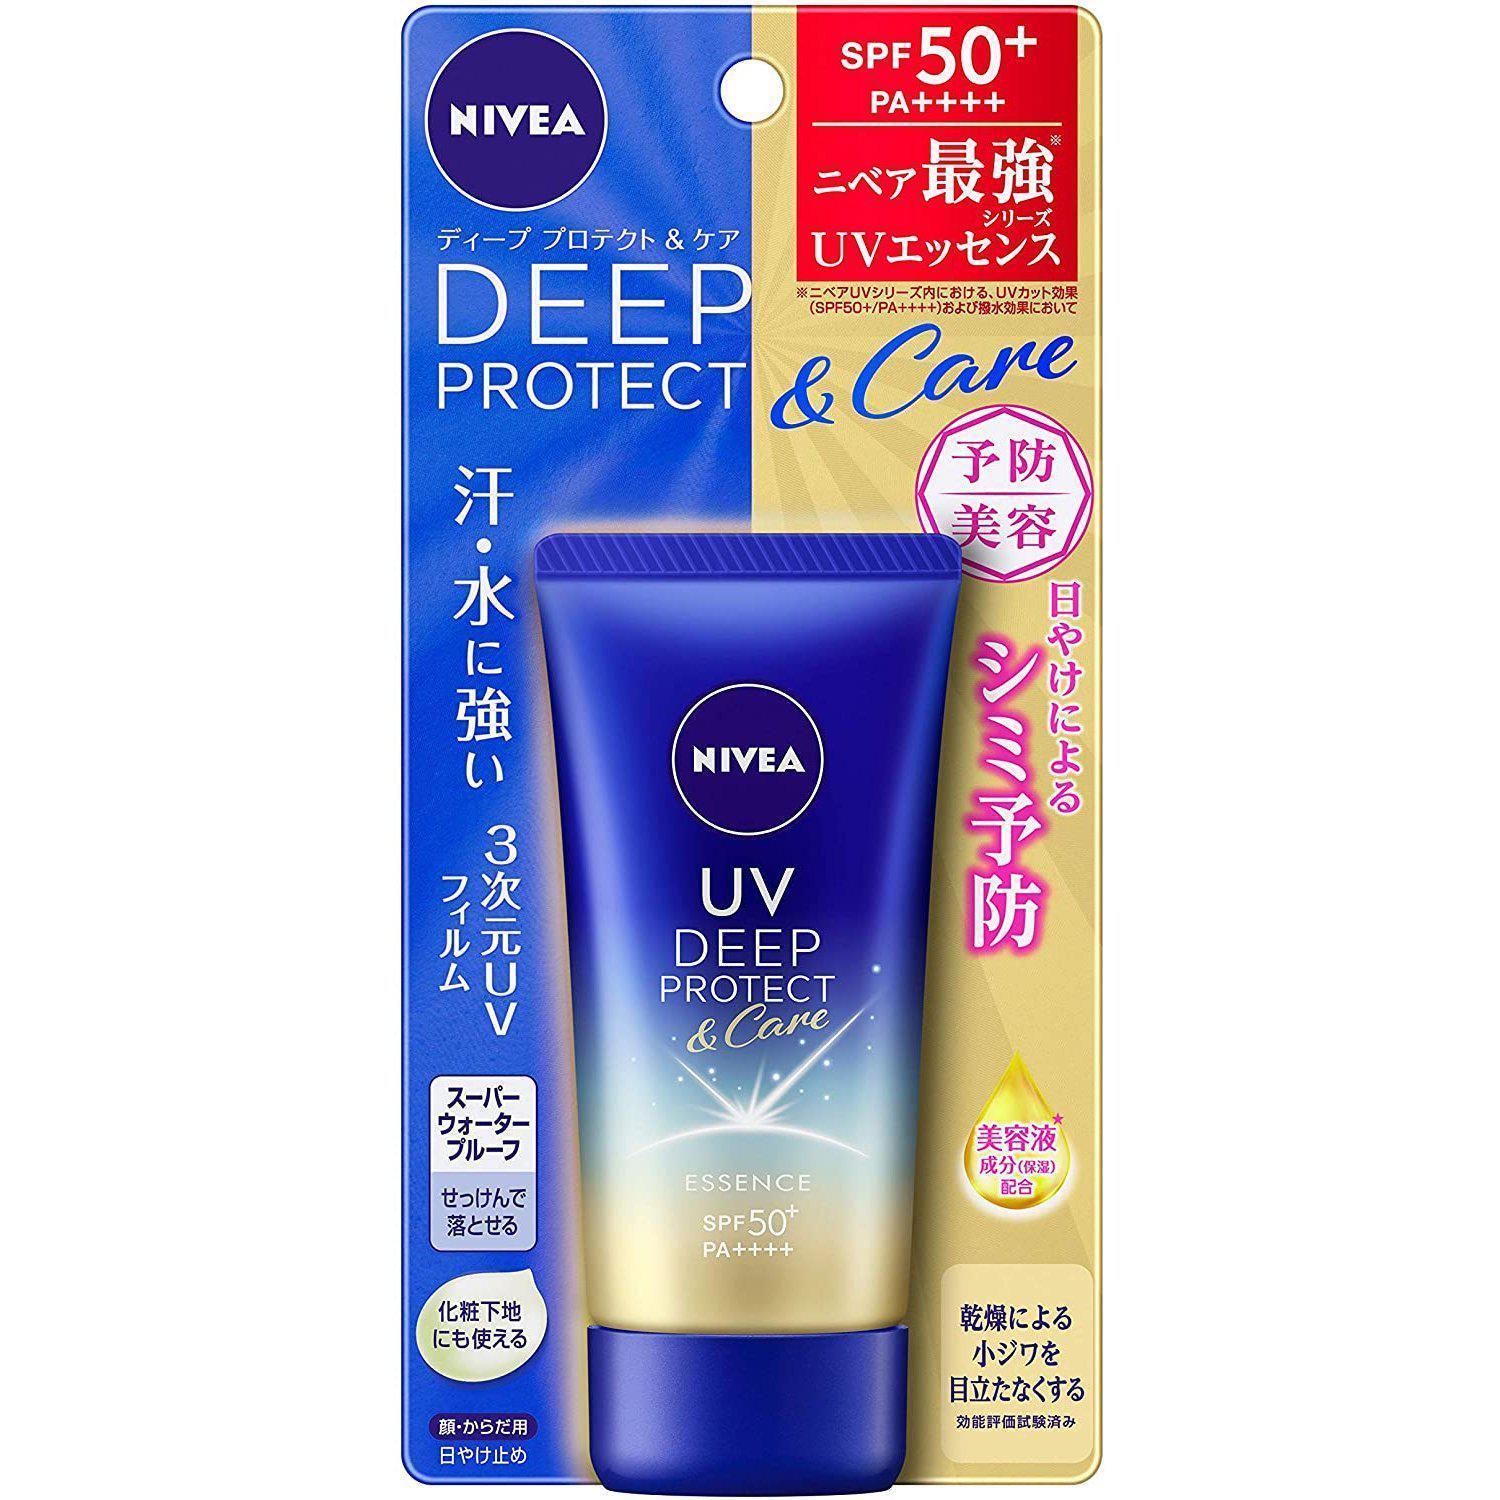 Nivea UV Deep Protect & Care Essence Sunscreen SPF50+ PA++++ 50g, Japanese Taste